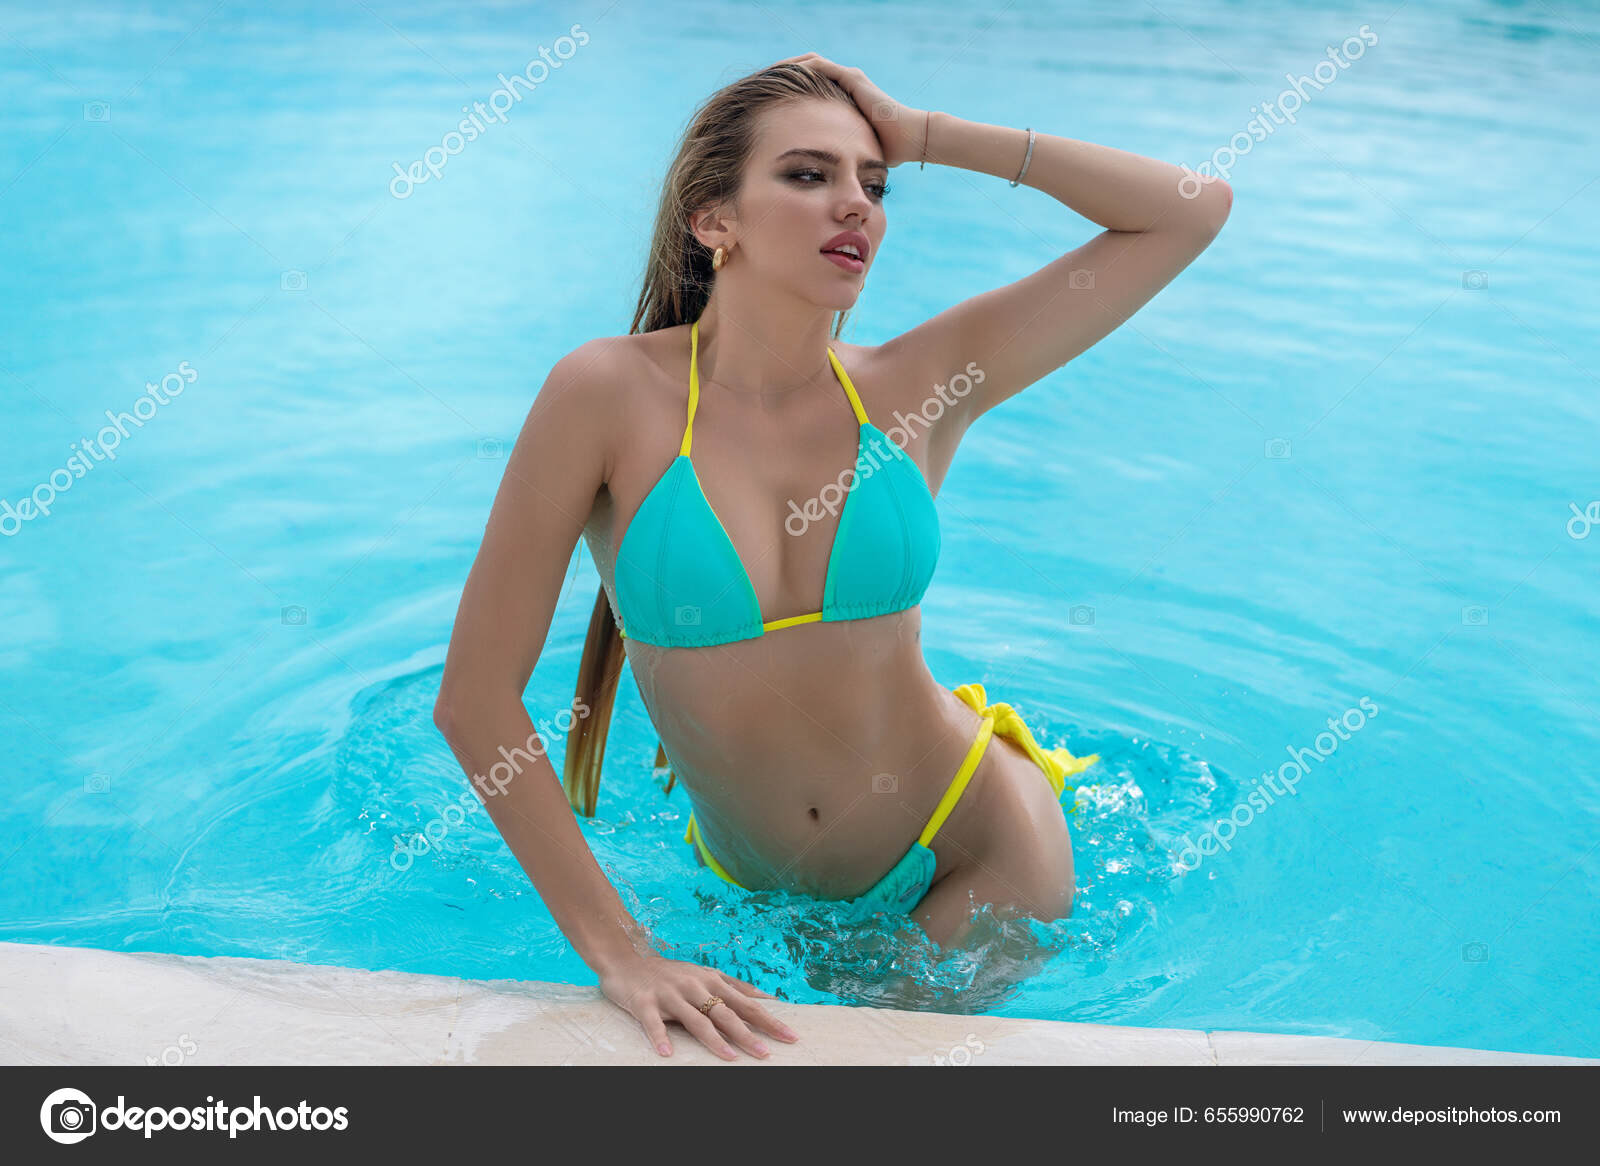 Beautiful Young Woman Model Bikini Swimming Pool Sexy Posing Poolside –  stockfoto © Tverdohlib.com #655990762